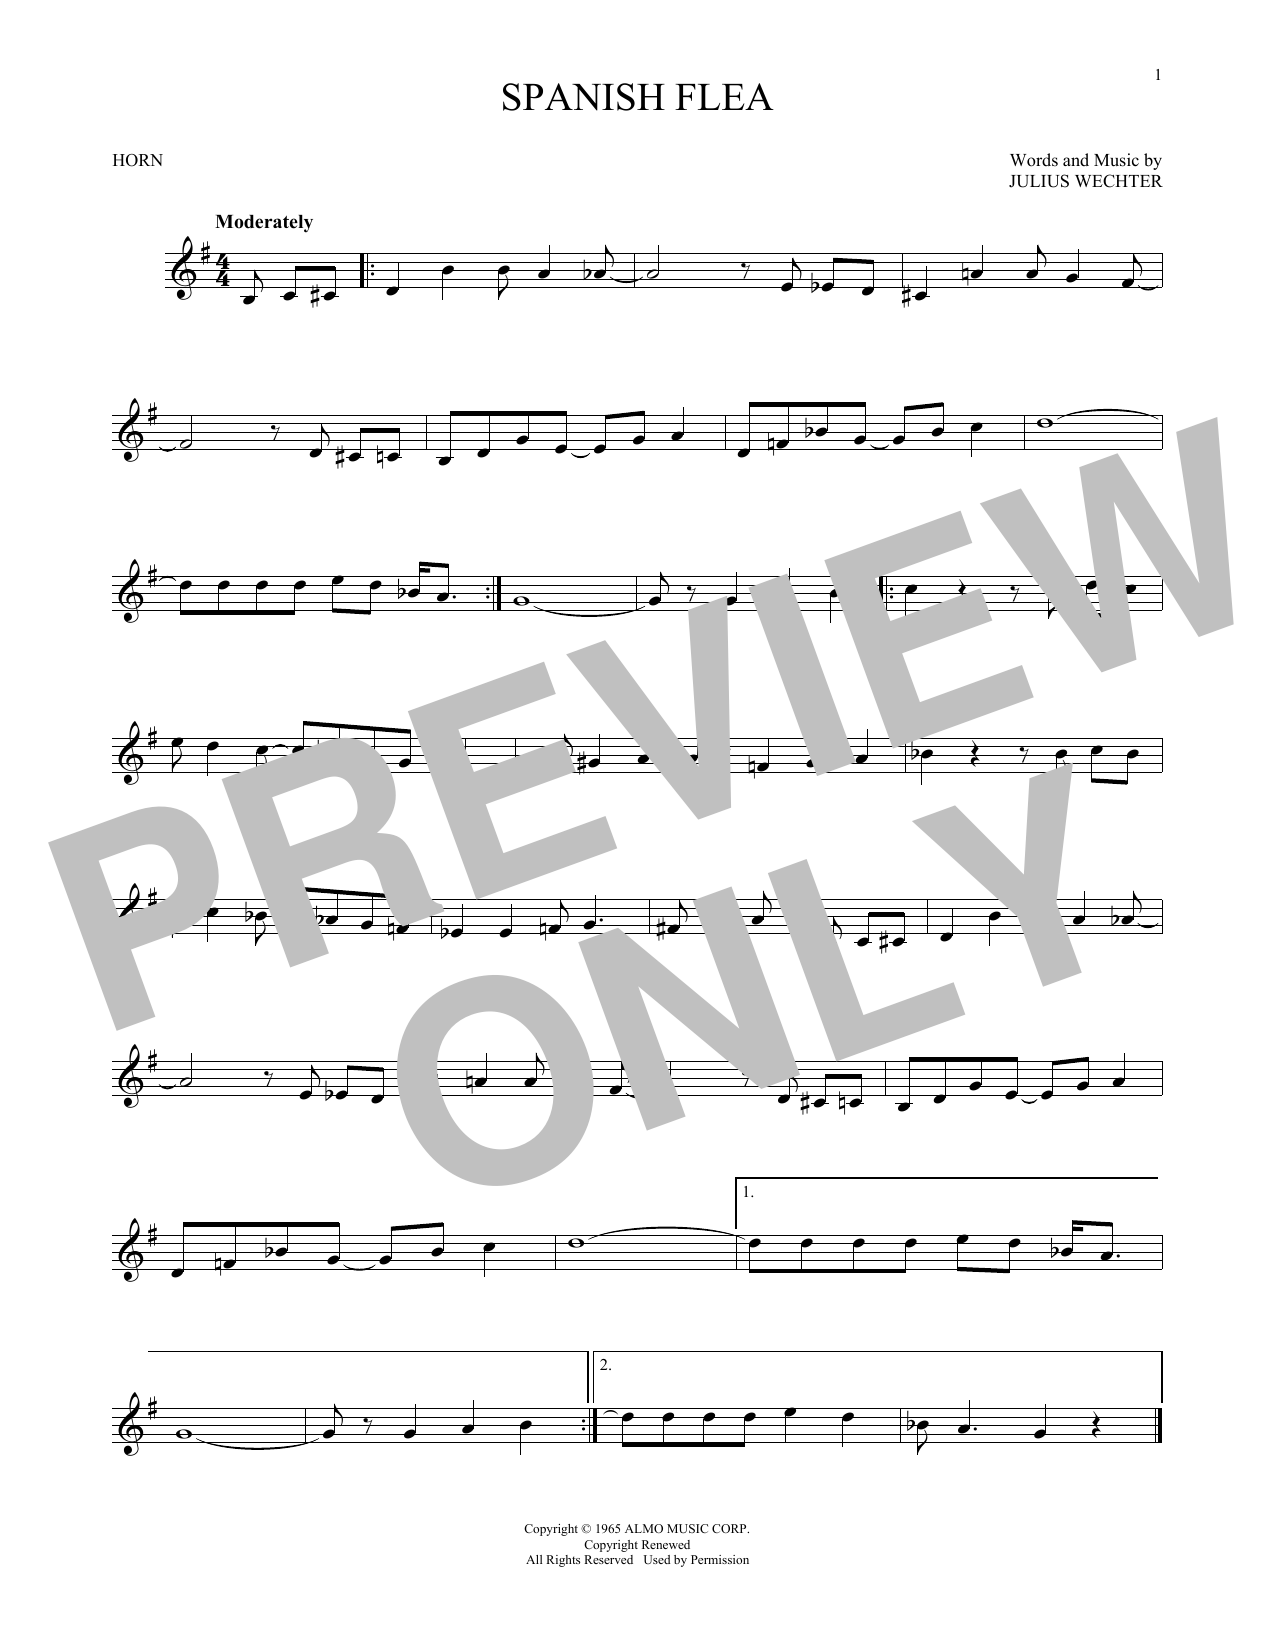 Herb Alpert & The Tijuana Brass Band Spanish Flea Sheet Music Notes & Chords for Clarinet - Download or Print PDF